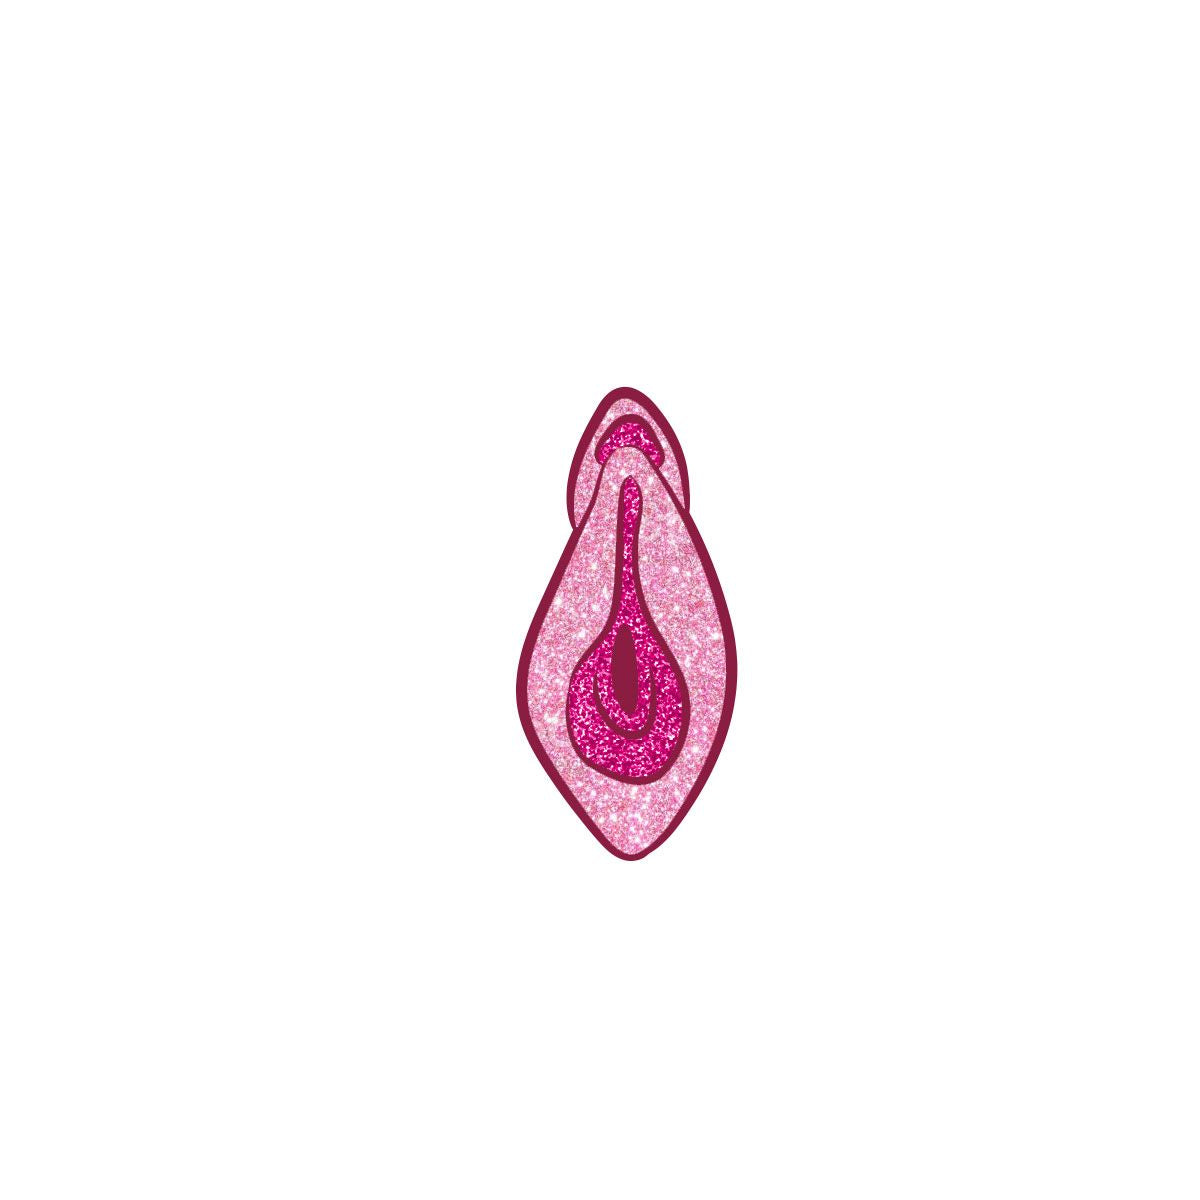 Enamel Pin: Vulva - Sparkly Pink